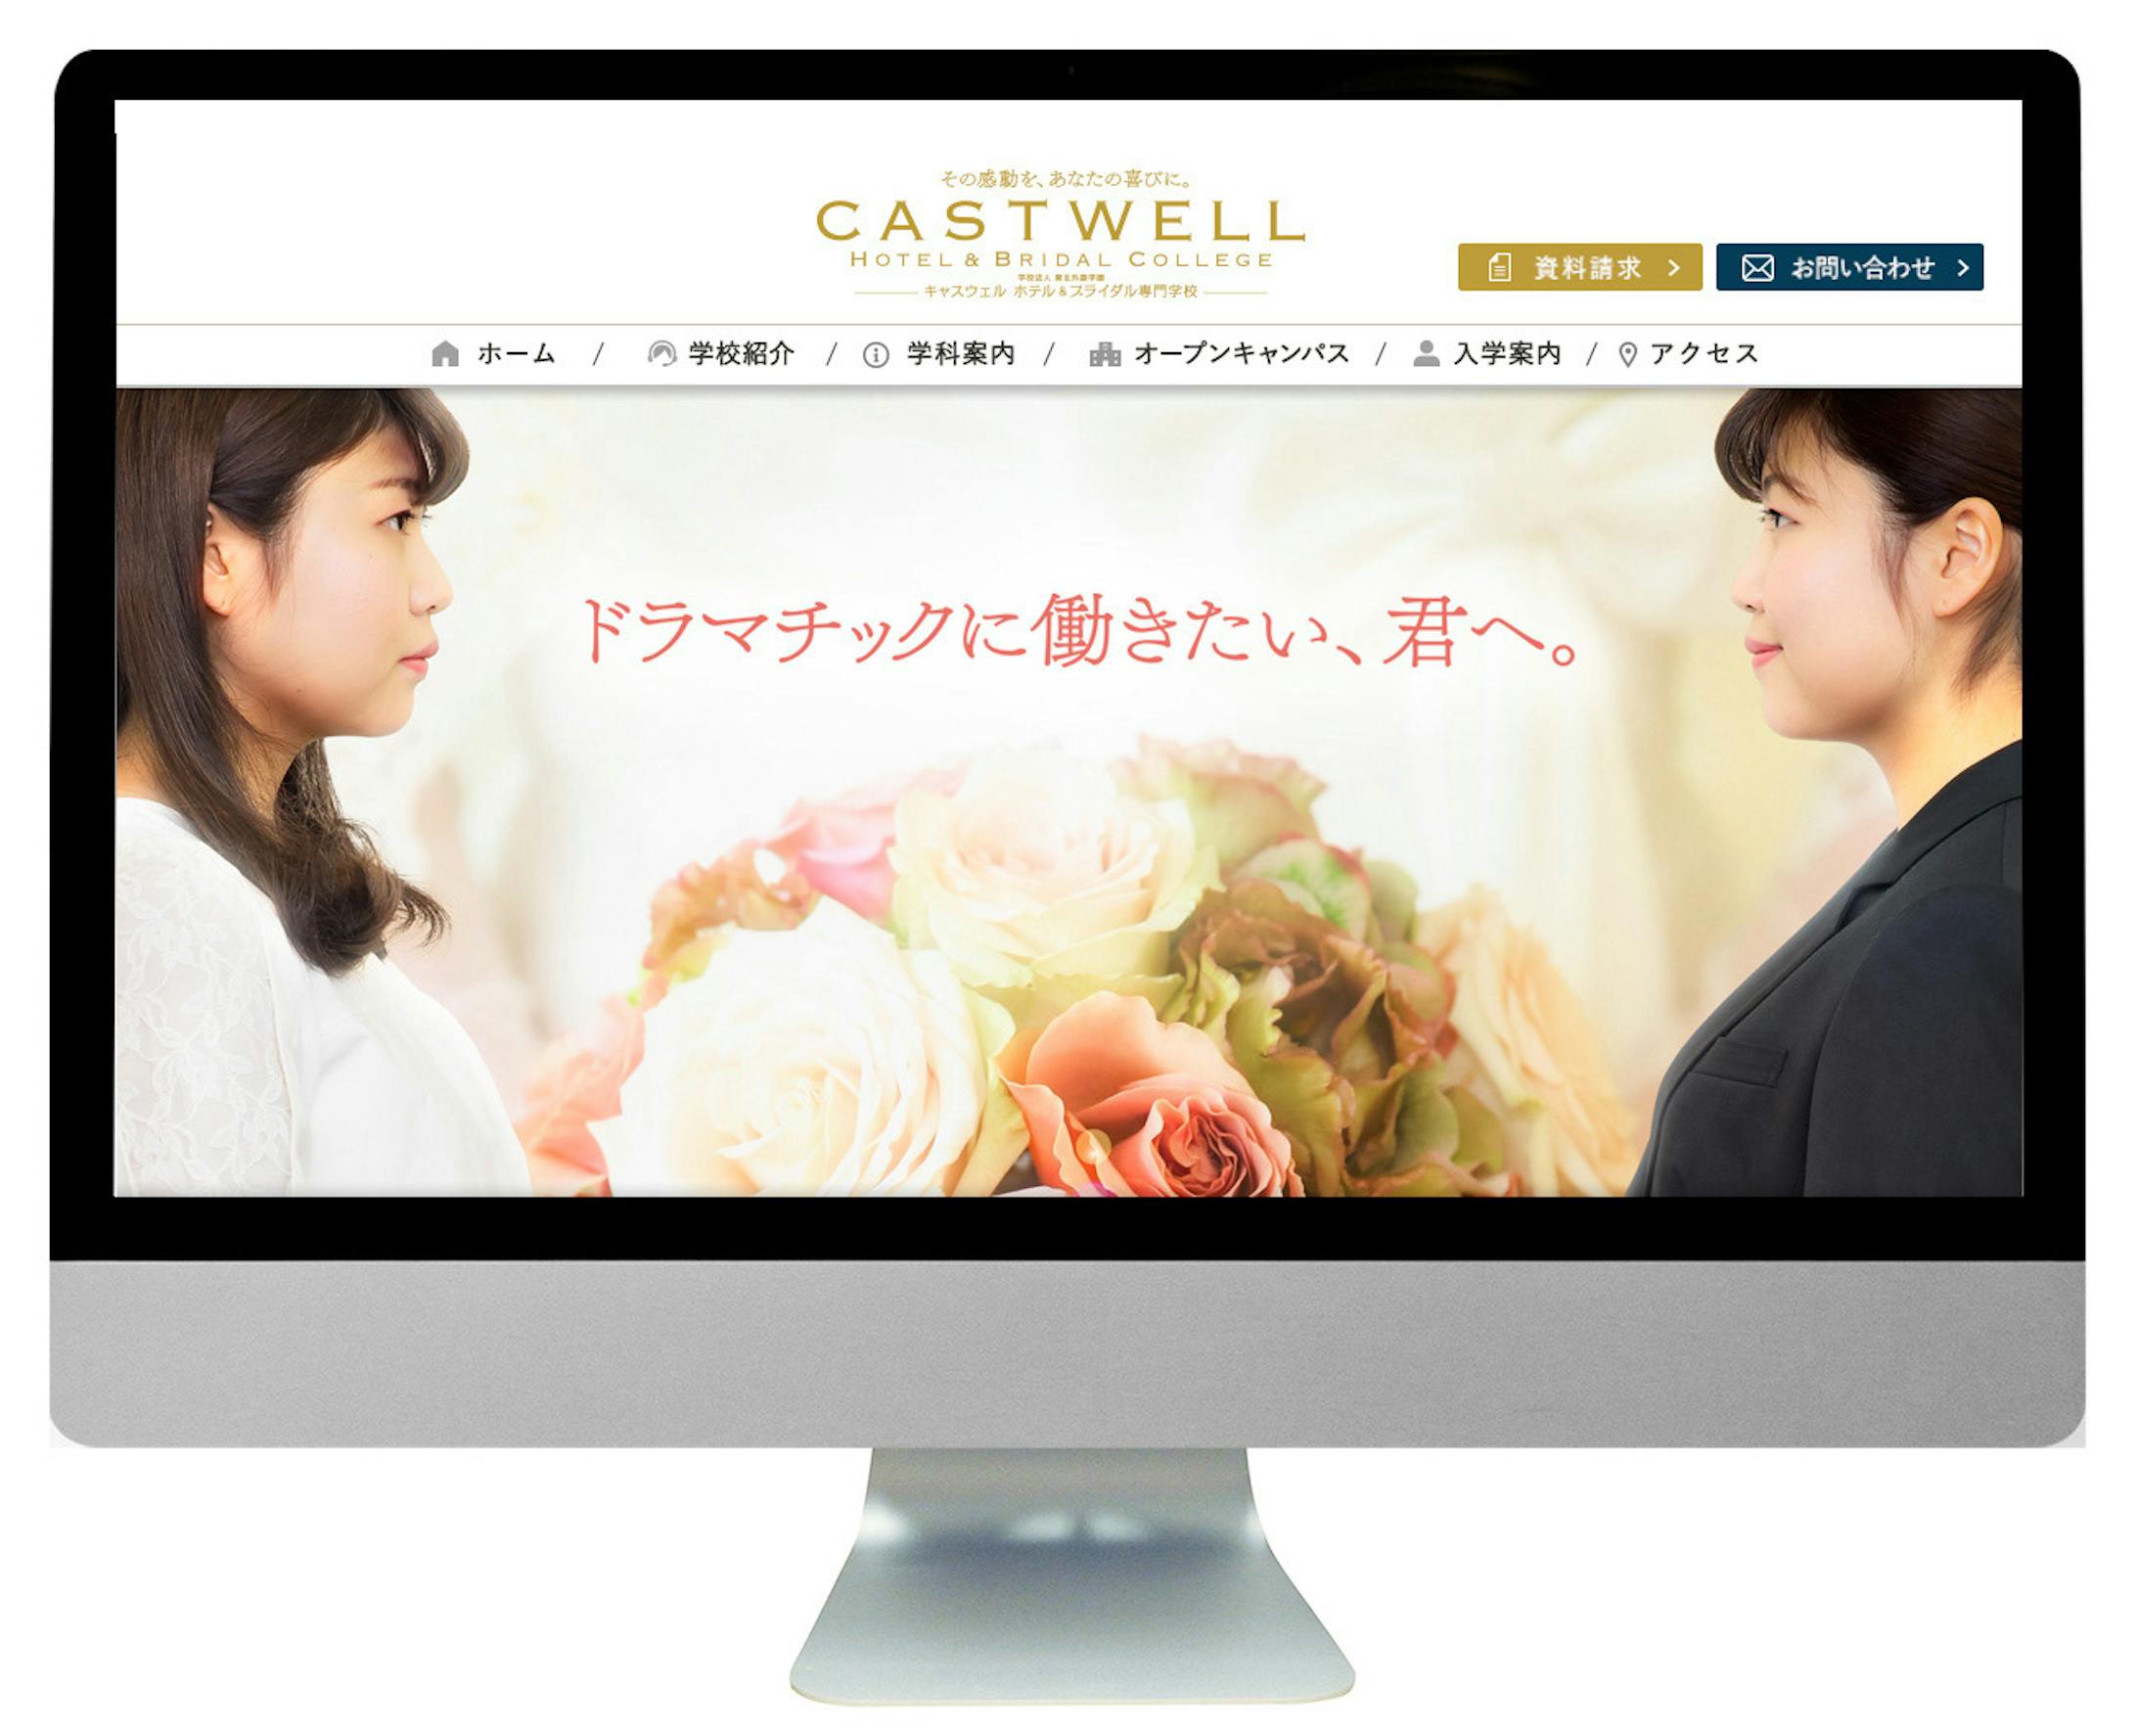 CASTWELL Hotel & bridal college-1